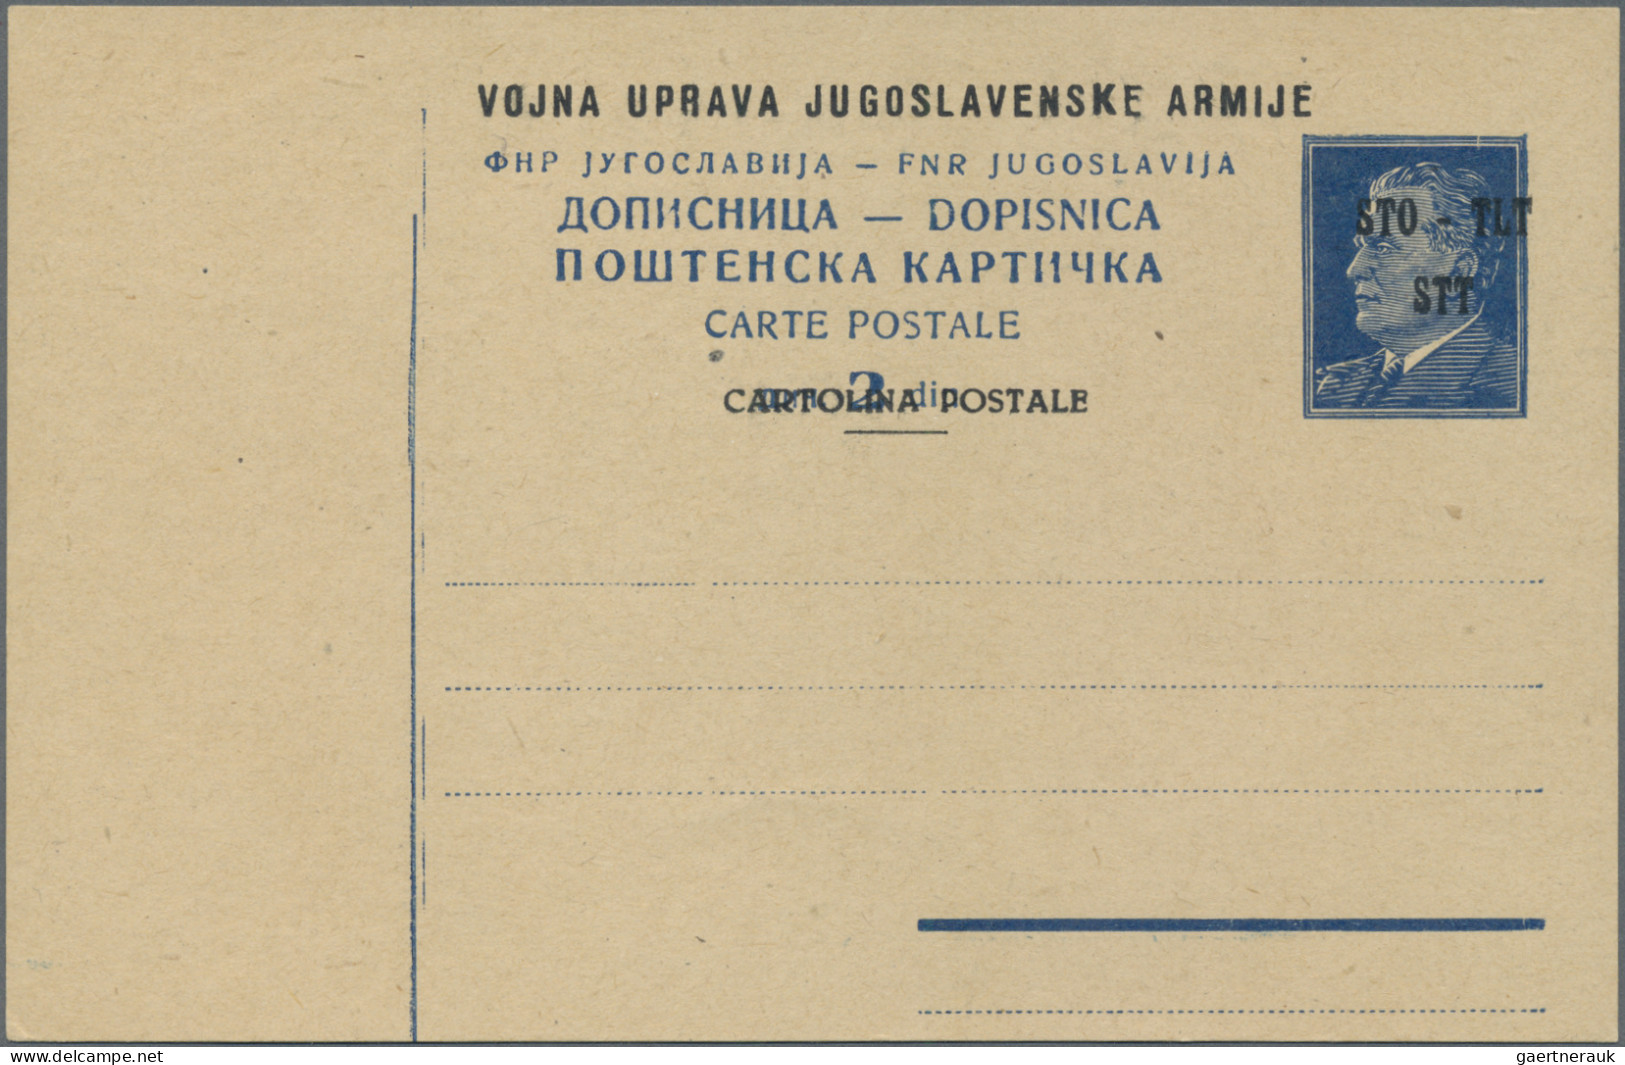 Trieste - Zone B - postal stationery: 1947/1954, lot of six postal cards and thr